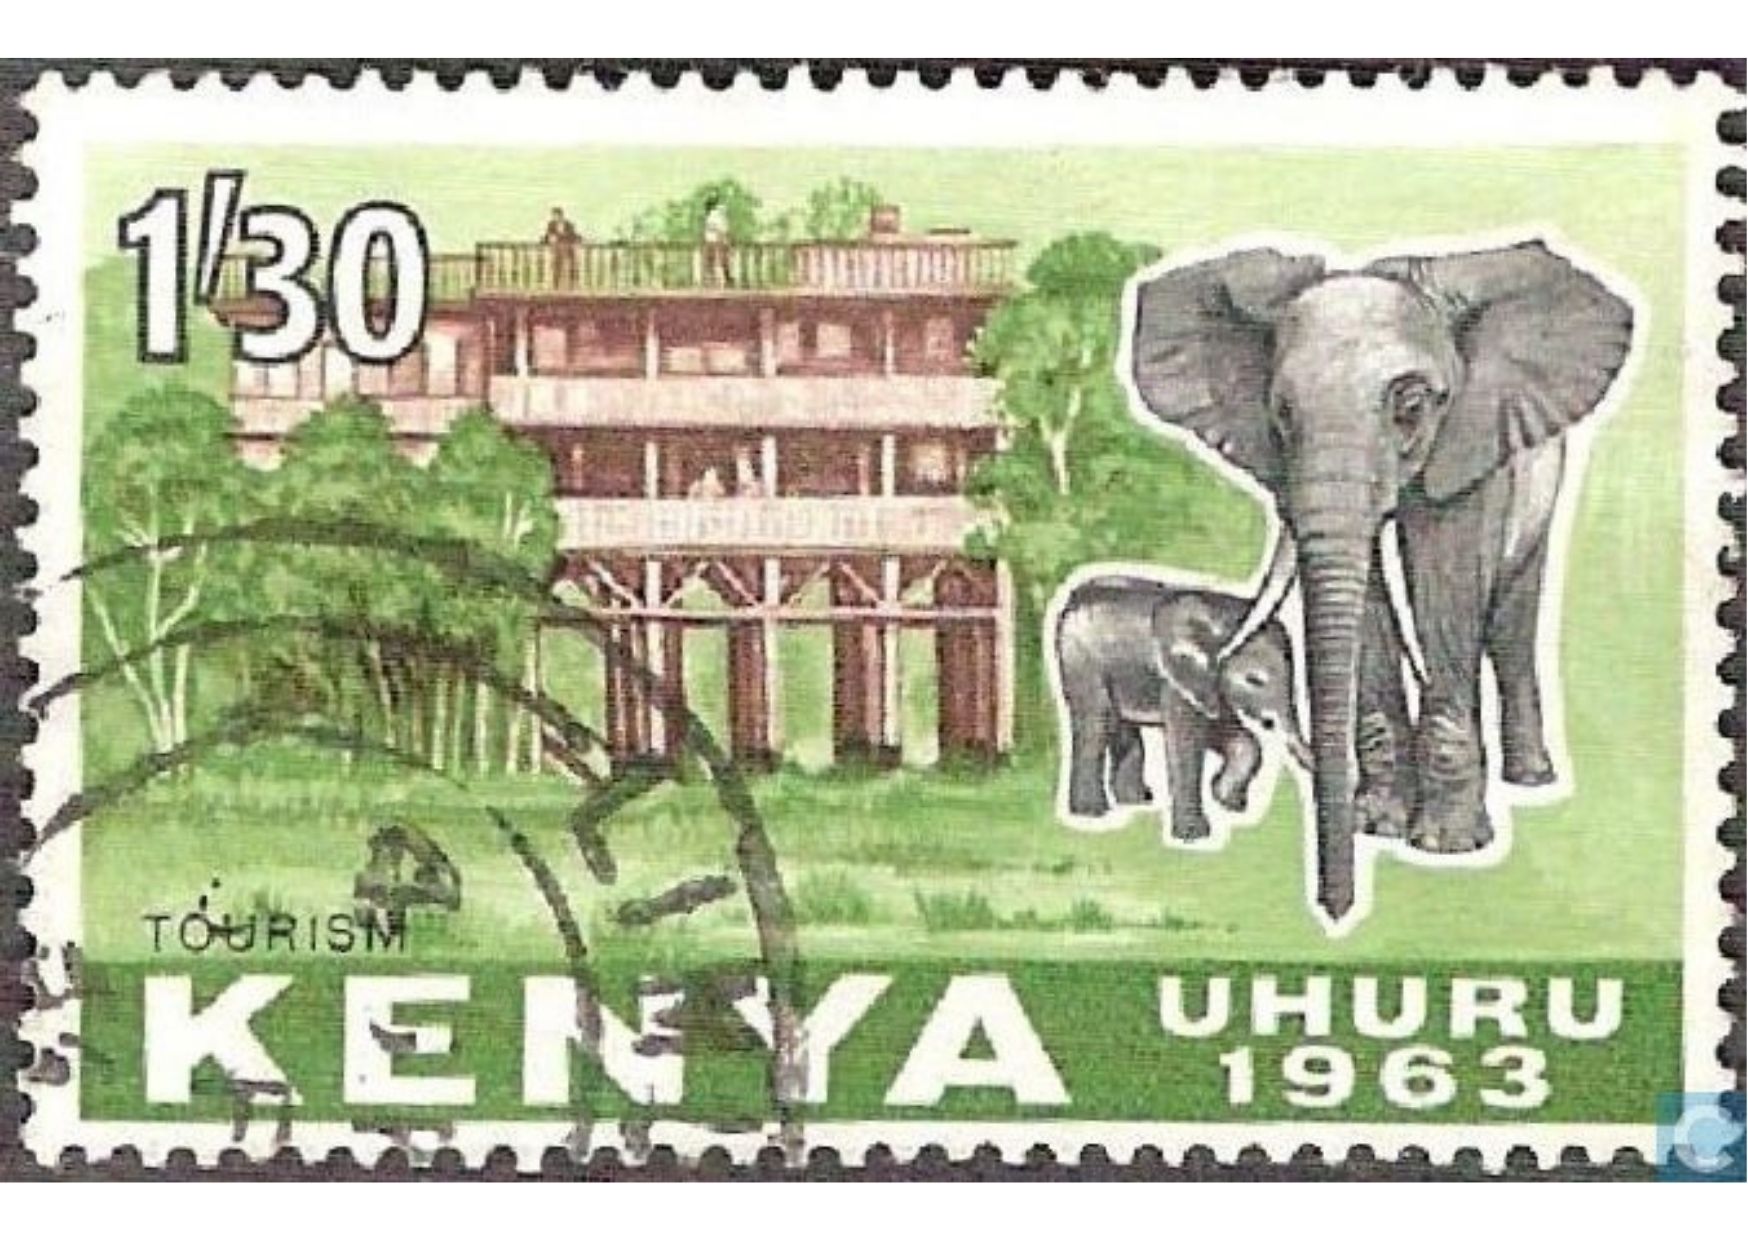 Uhuru-Tourism